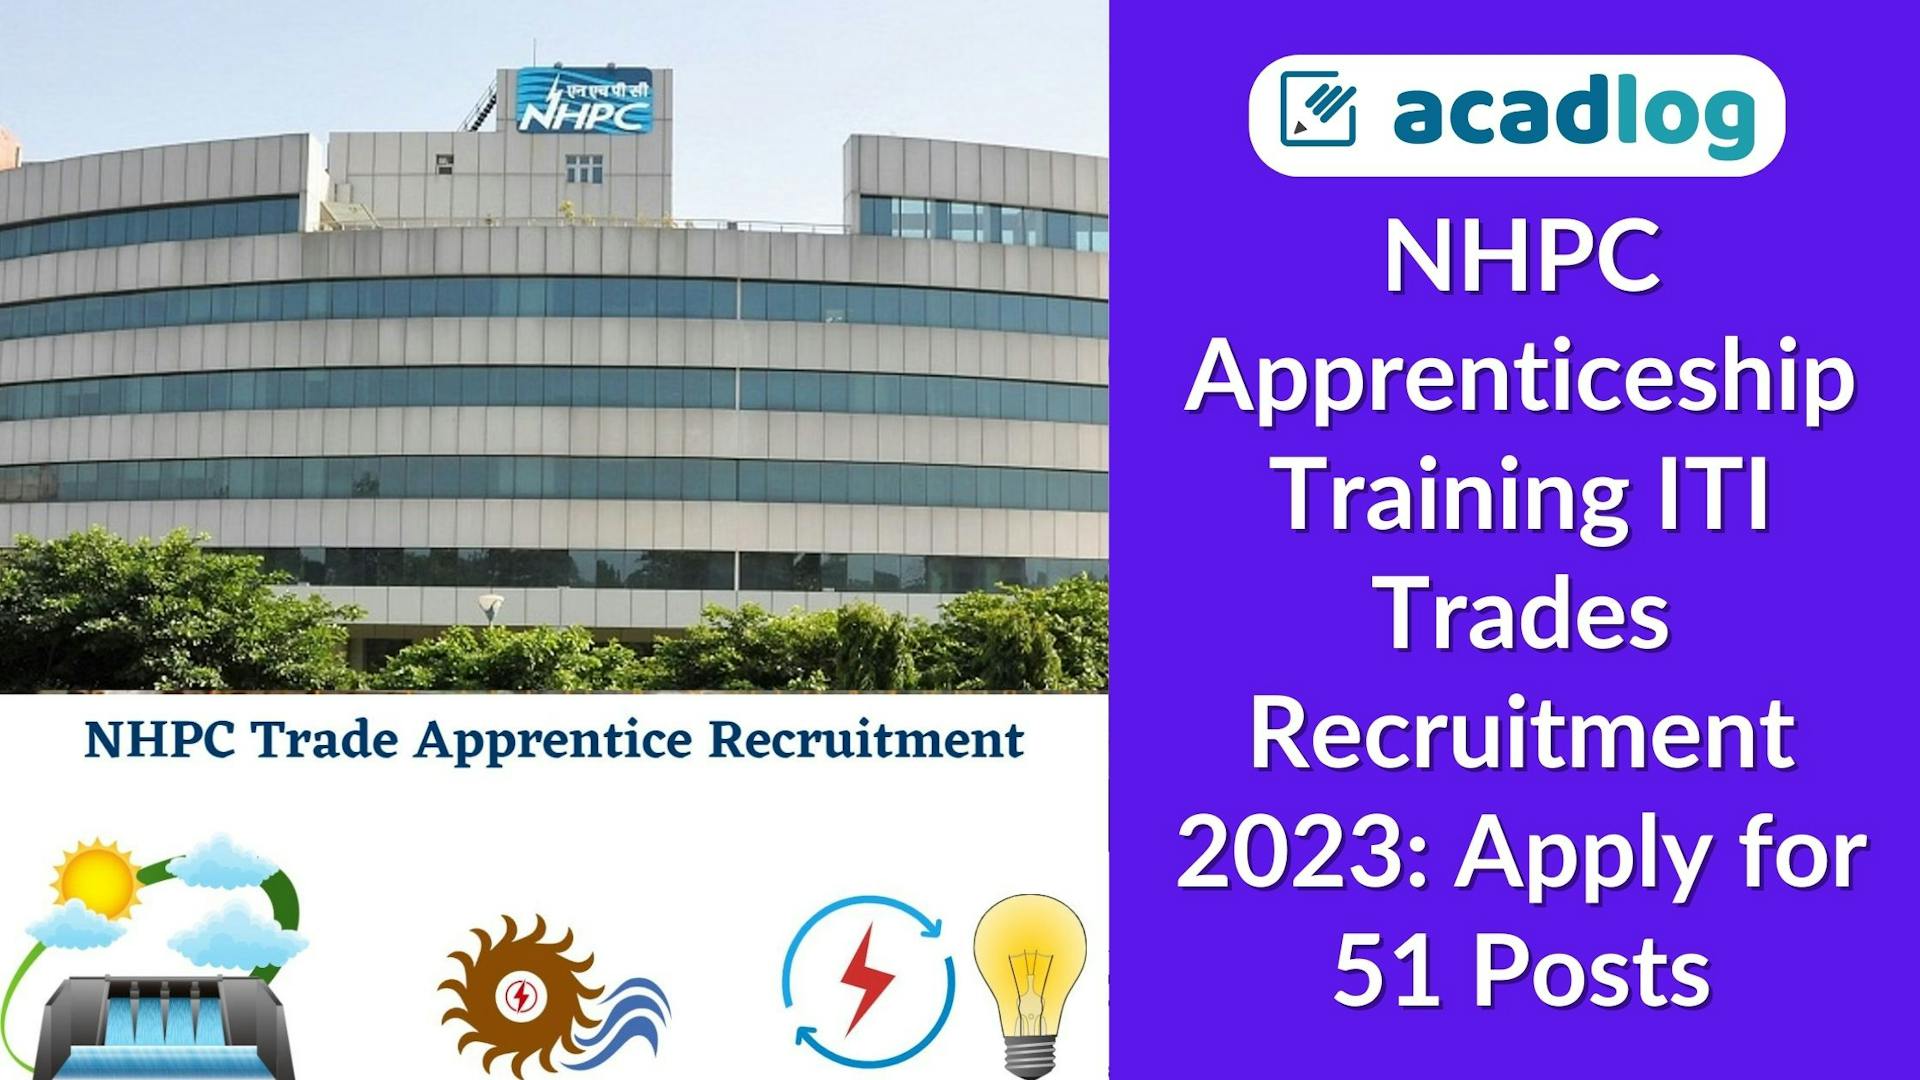 NHPC Apprenticeship Training ITI Trades Recruitment 2023: Apply for 51 Posts